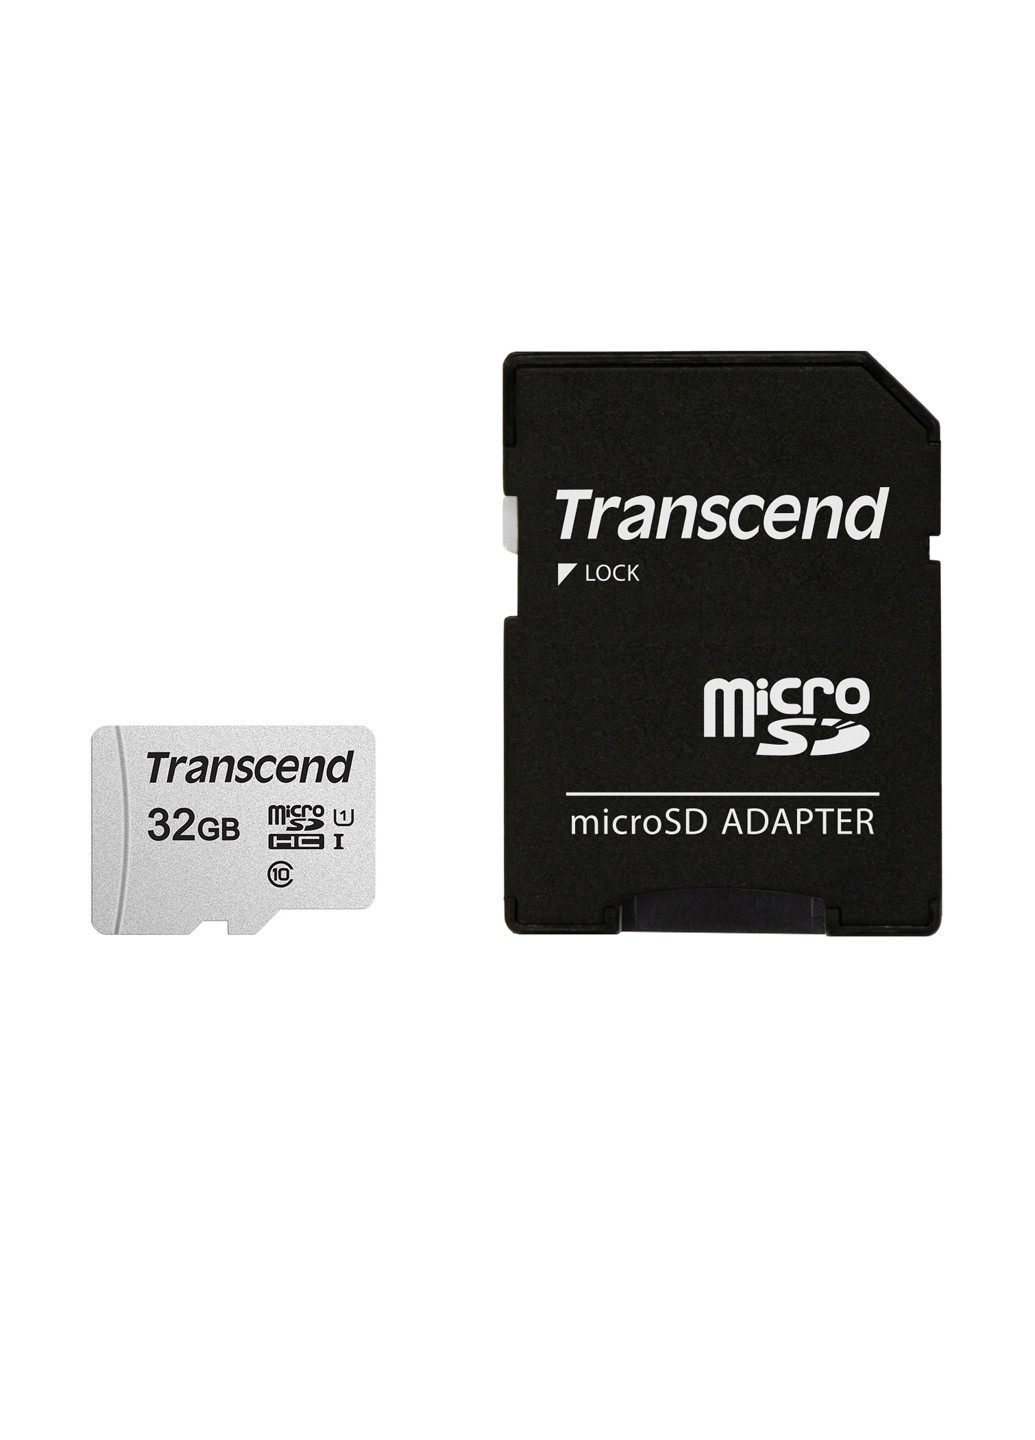 Карта памяти microSDHC 32GB C10 UHS-I (R95/W45MB/s) + SD-adapter (TS32GUSD300S-A) Transcend карта памяти transcend microsdhc 32gb c10 uhs-i (r95/w45mb/s) + sd-adapter (ts32gusd300s-a) (135316897)